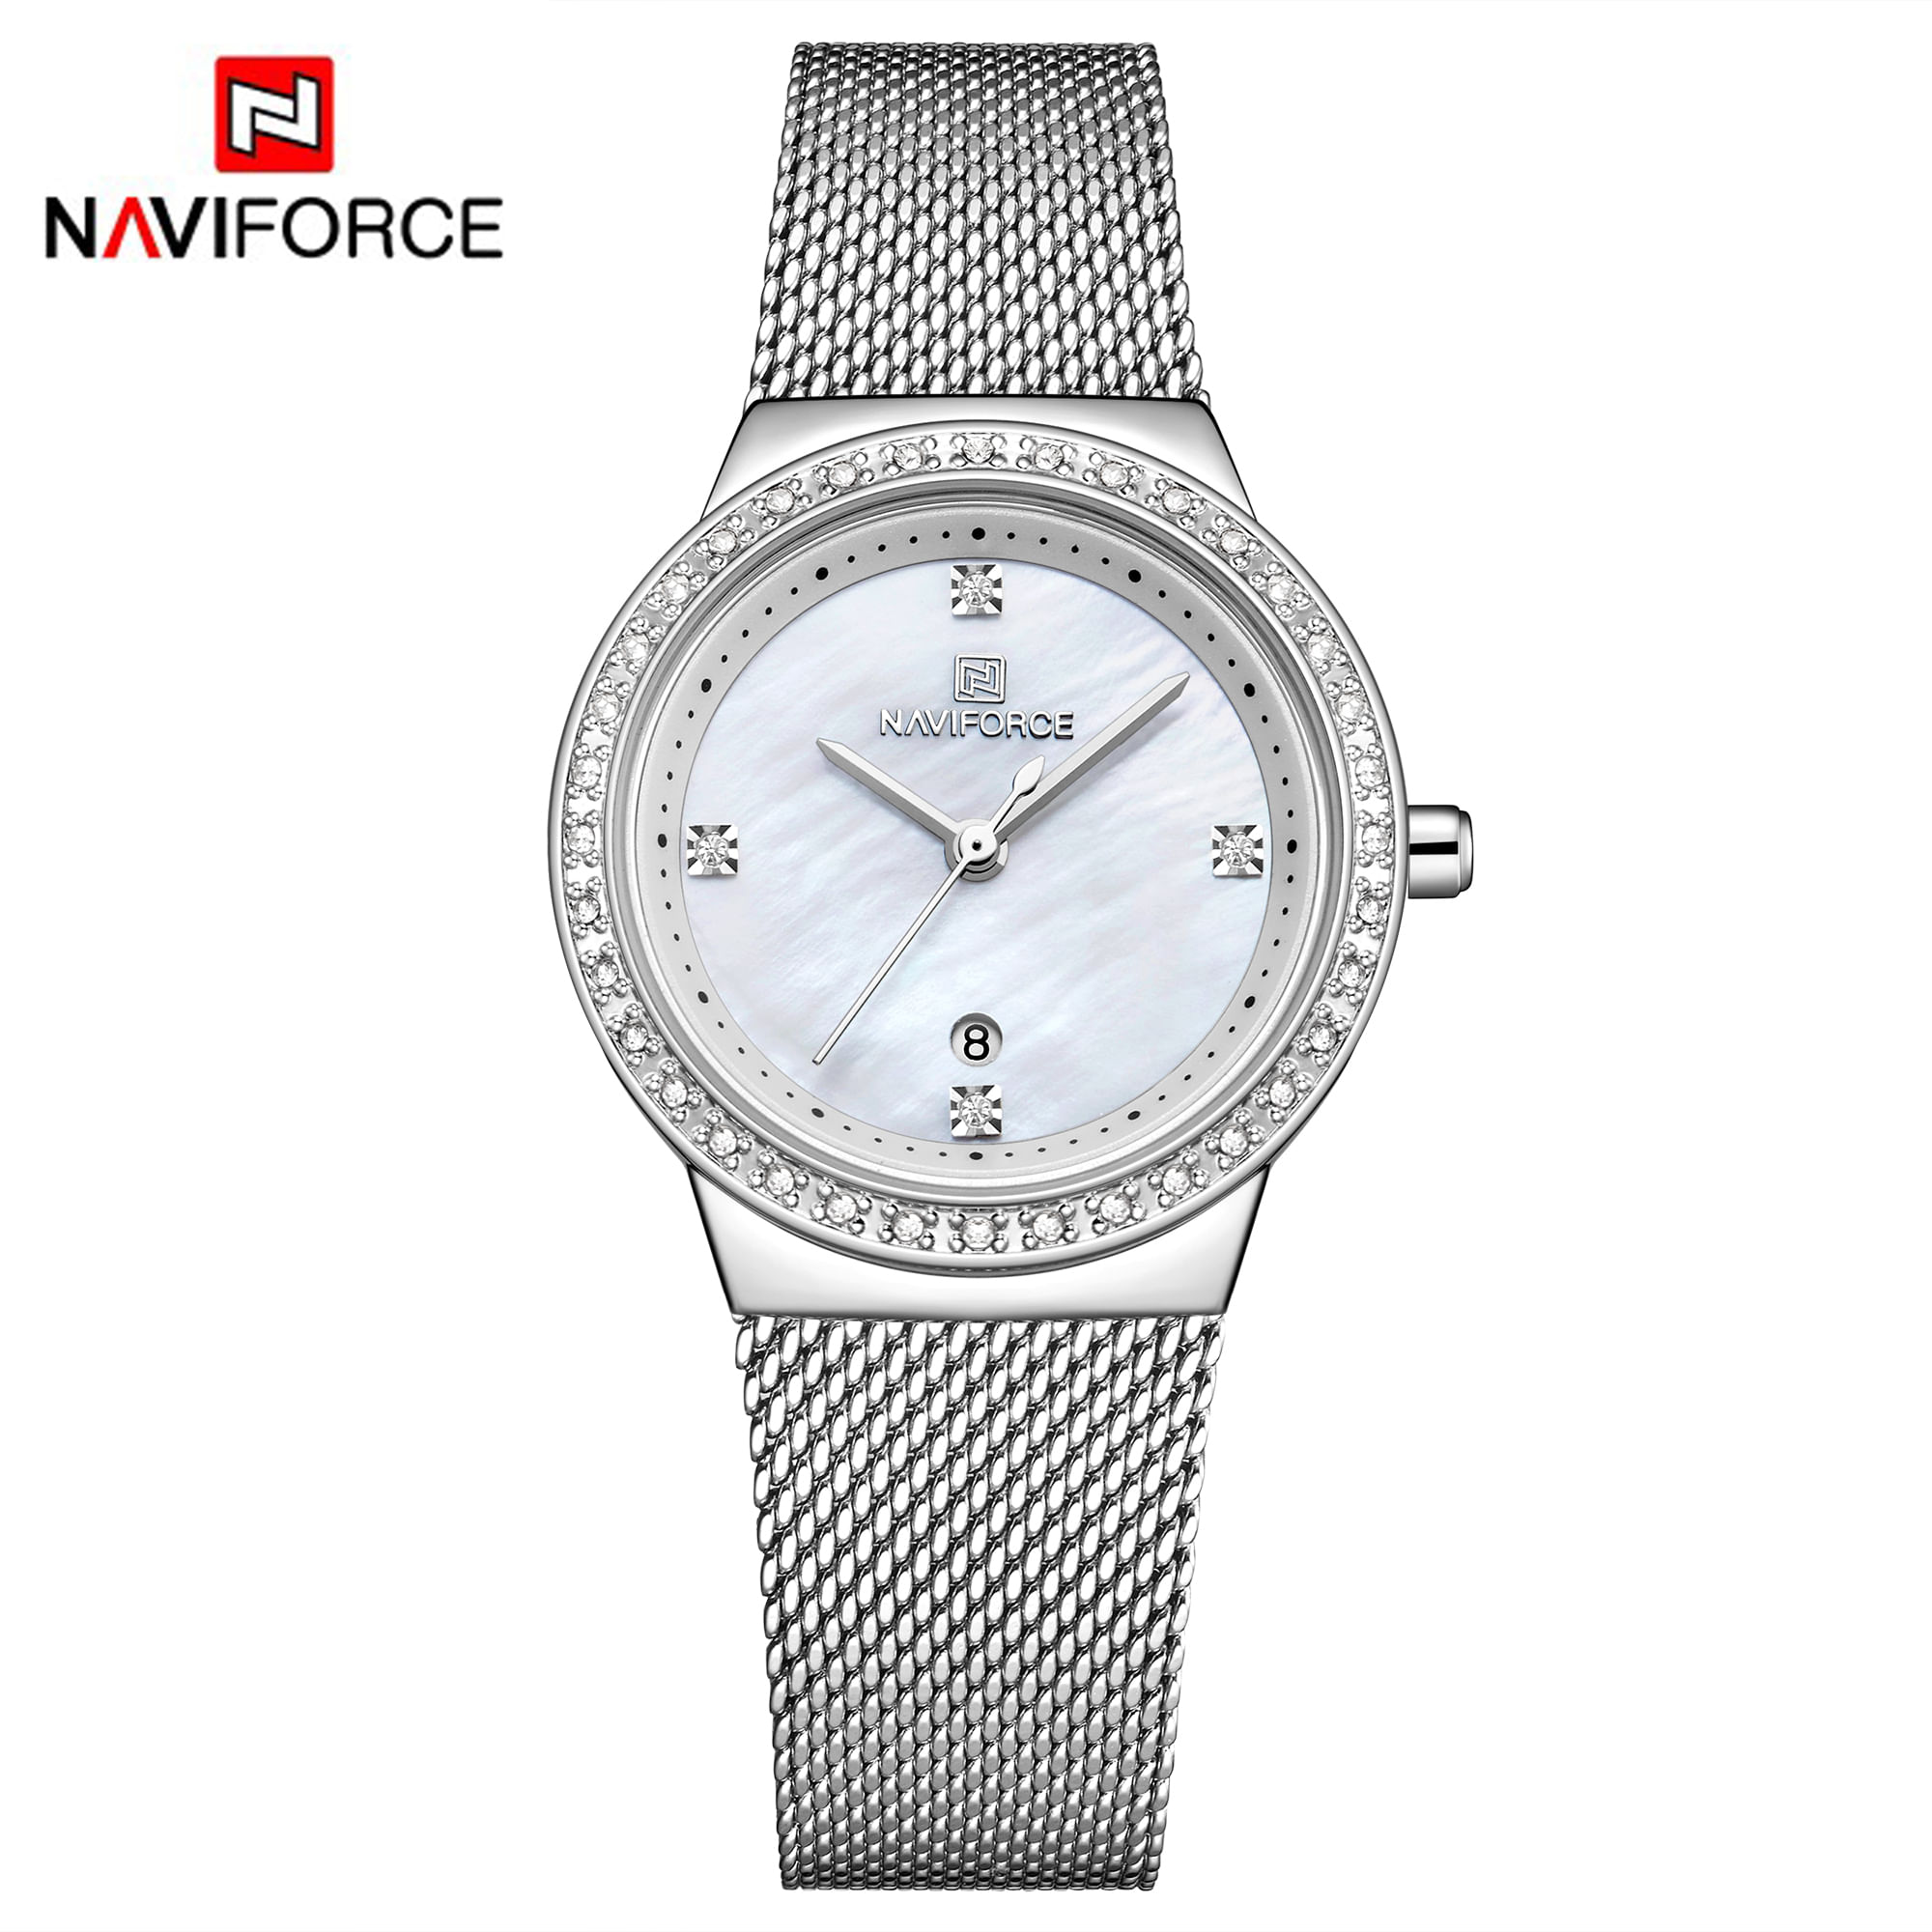 Reloj Naviforce Dama NF5005 PLATA BLANCO Analógico Calendario Correa Acero Inoxidable Elegante